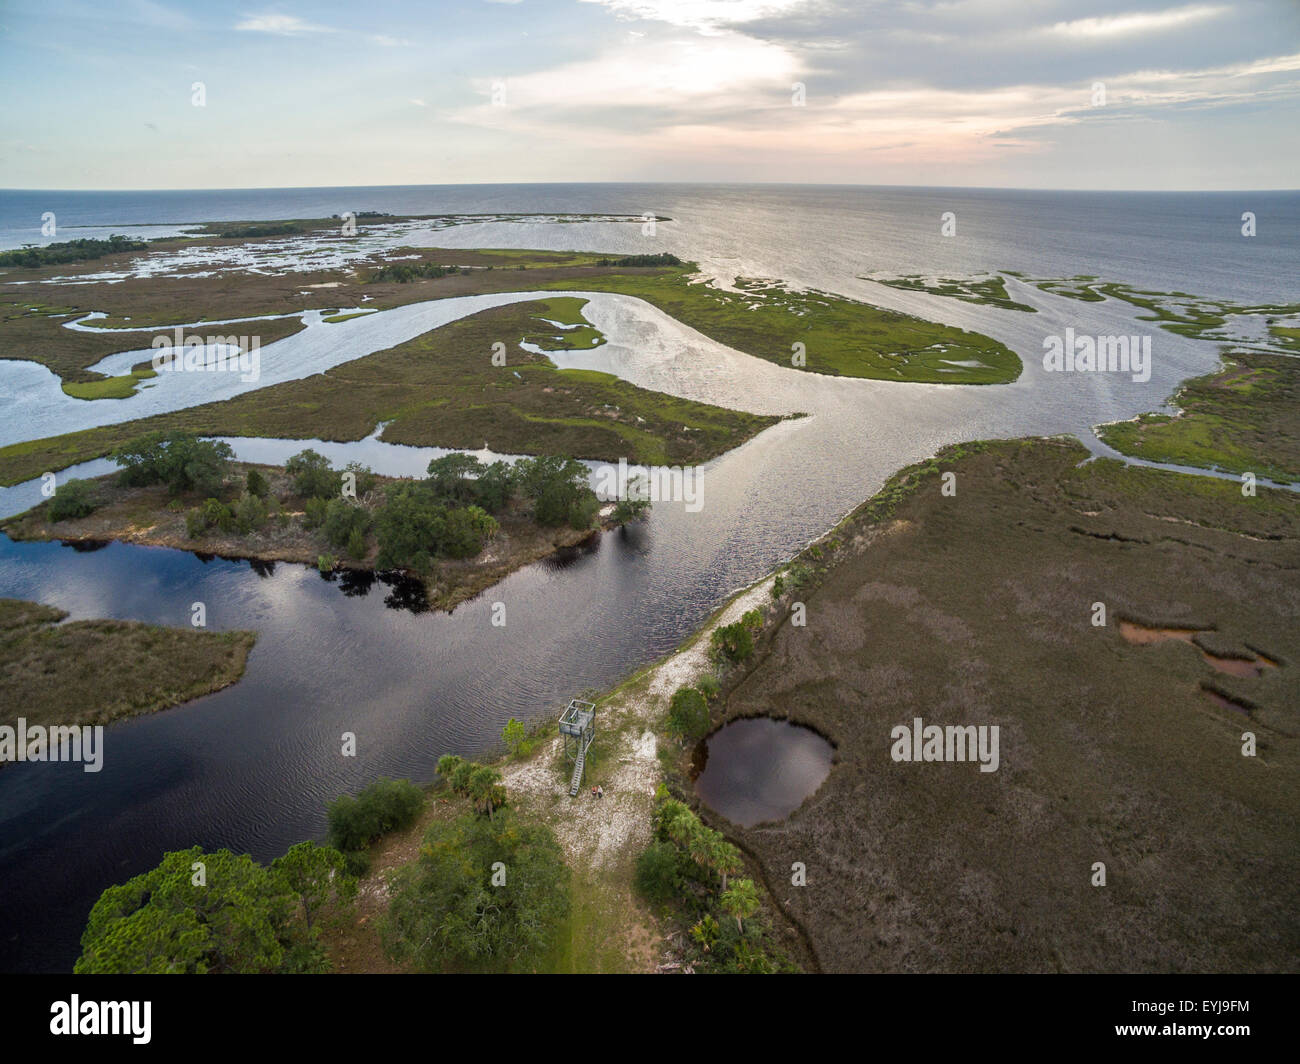 Salt marsh lining Fish Creek, Big Bend Seagrasses Aquatic Preserve, Florida Stock Photo